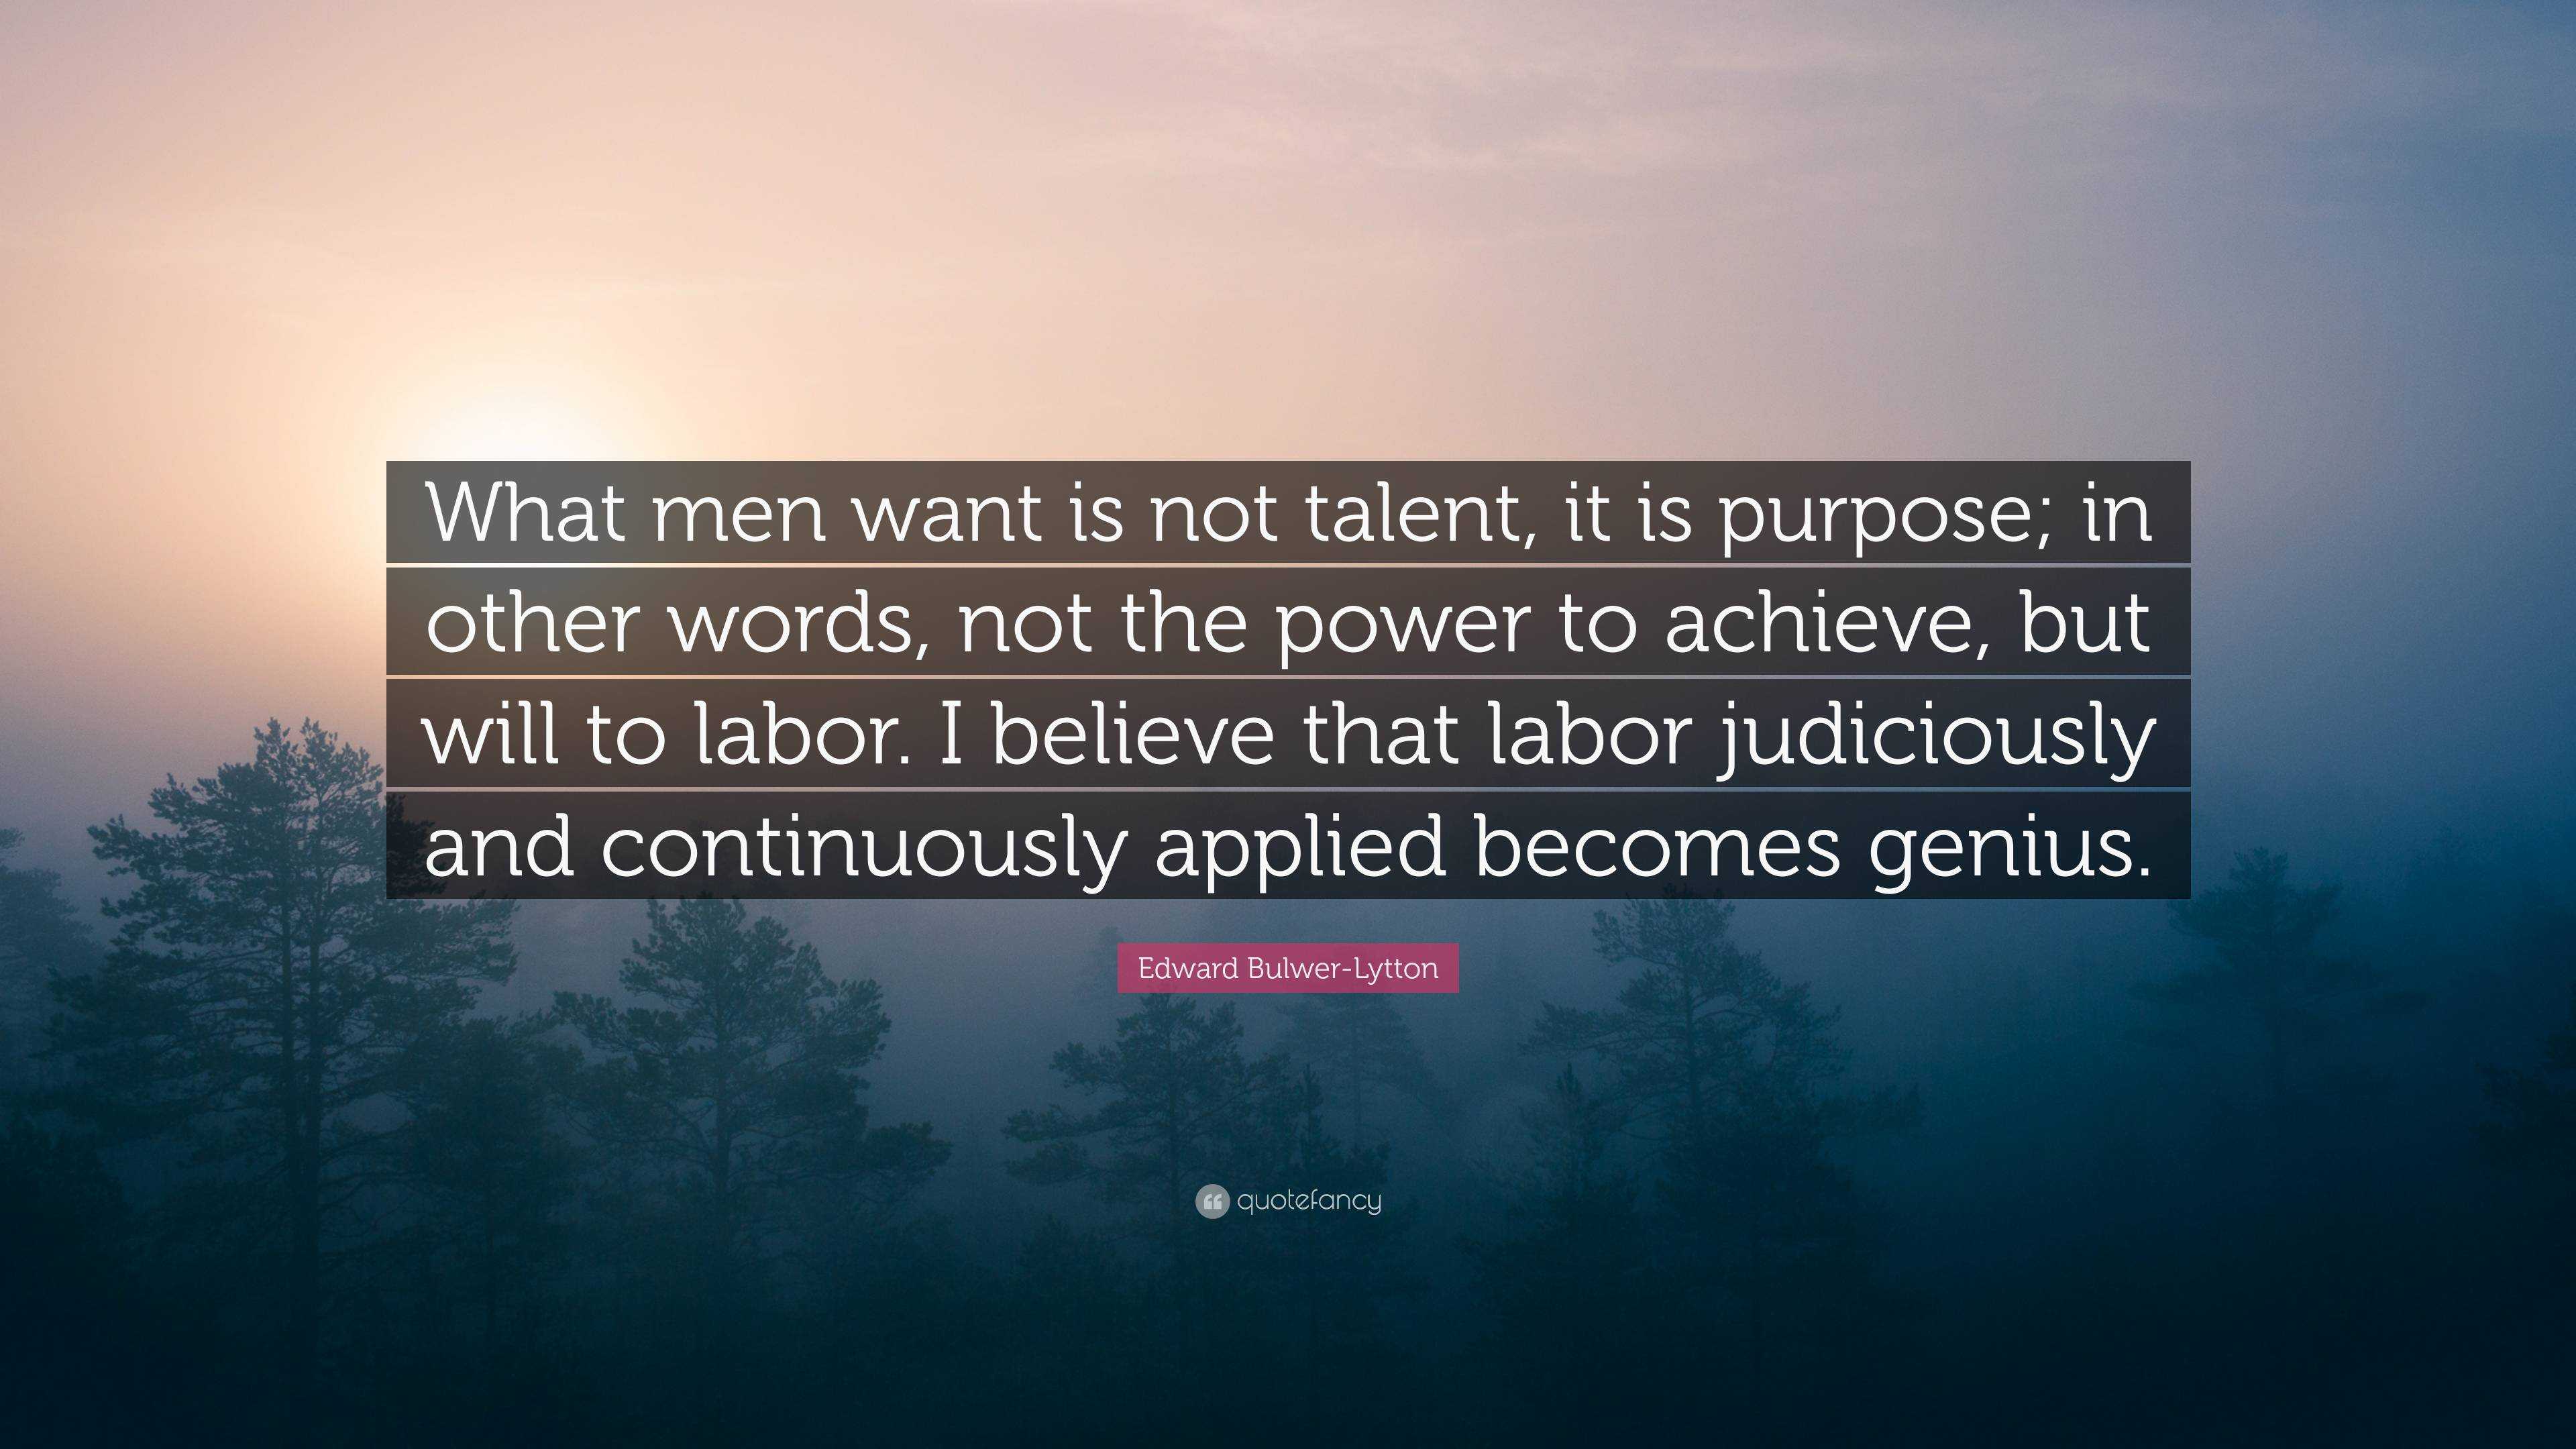 https://quotefancy.com/media/wallpaper/3840x2160/6472665-Edward-Bulwer-Lytton-Quote-What-men-want-is-not-talent-it-is.jpg